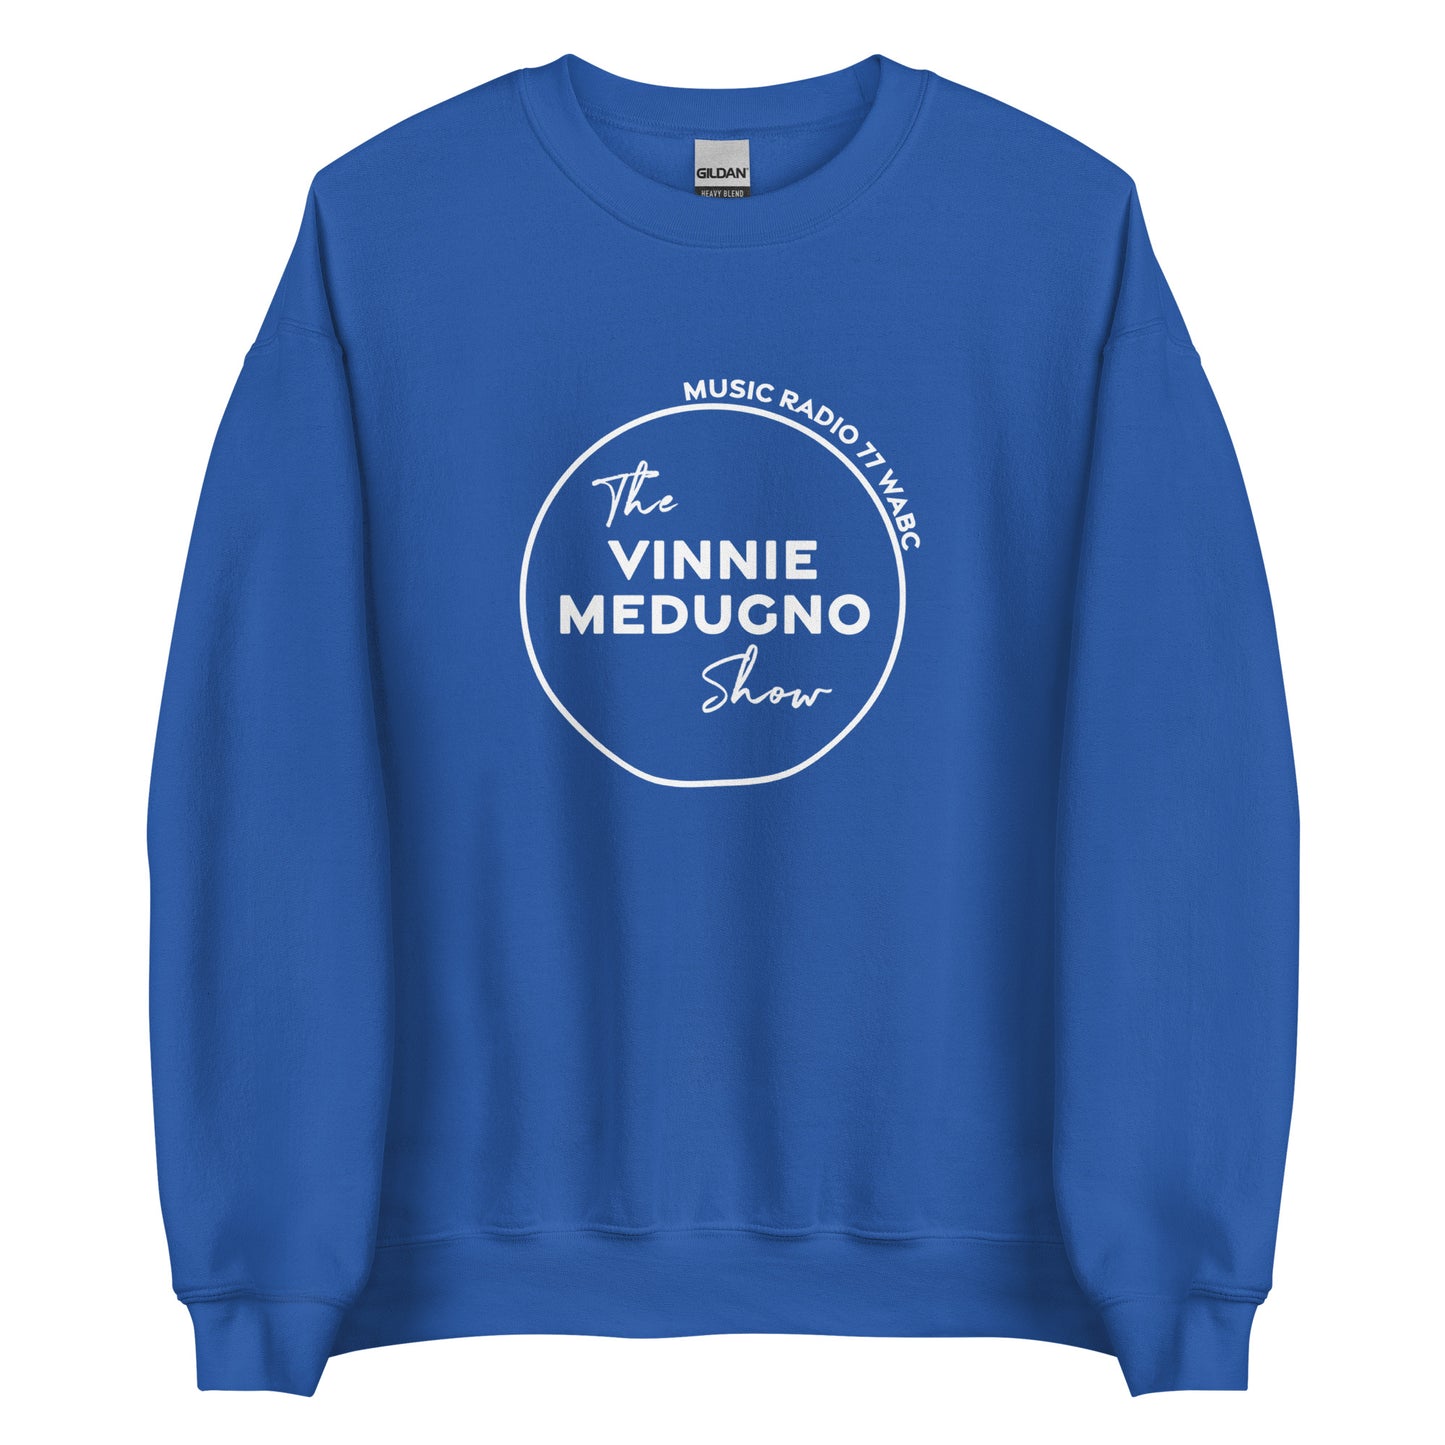 The Vinnie Medugno Sweatshirt